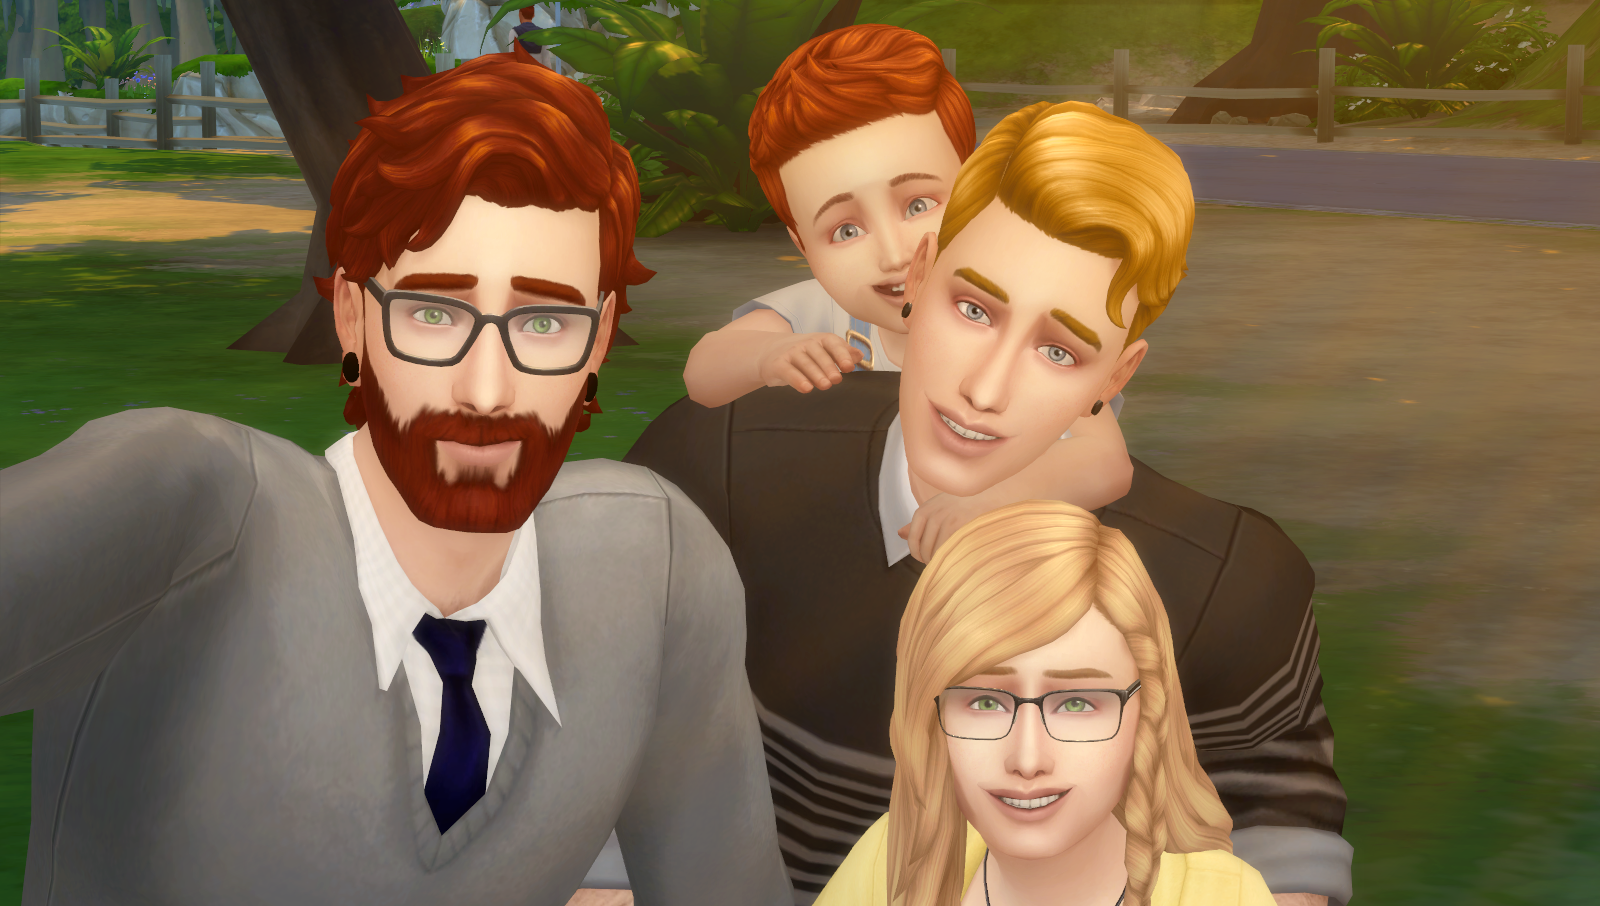 Sims 4 mods sim child. SIMS 4 Daddy. Семейный портрет симс 4. Семья СКАВО симс 4. SIMS 4 отец и сын.